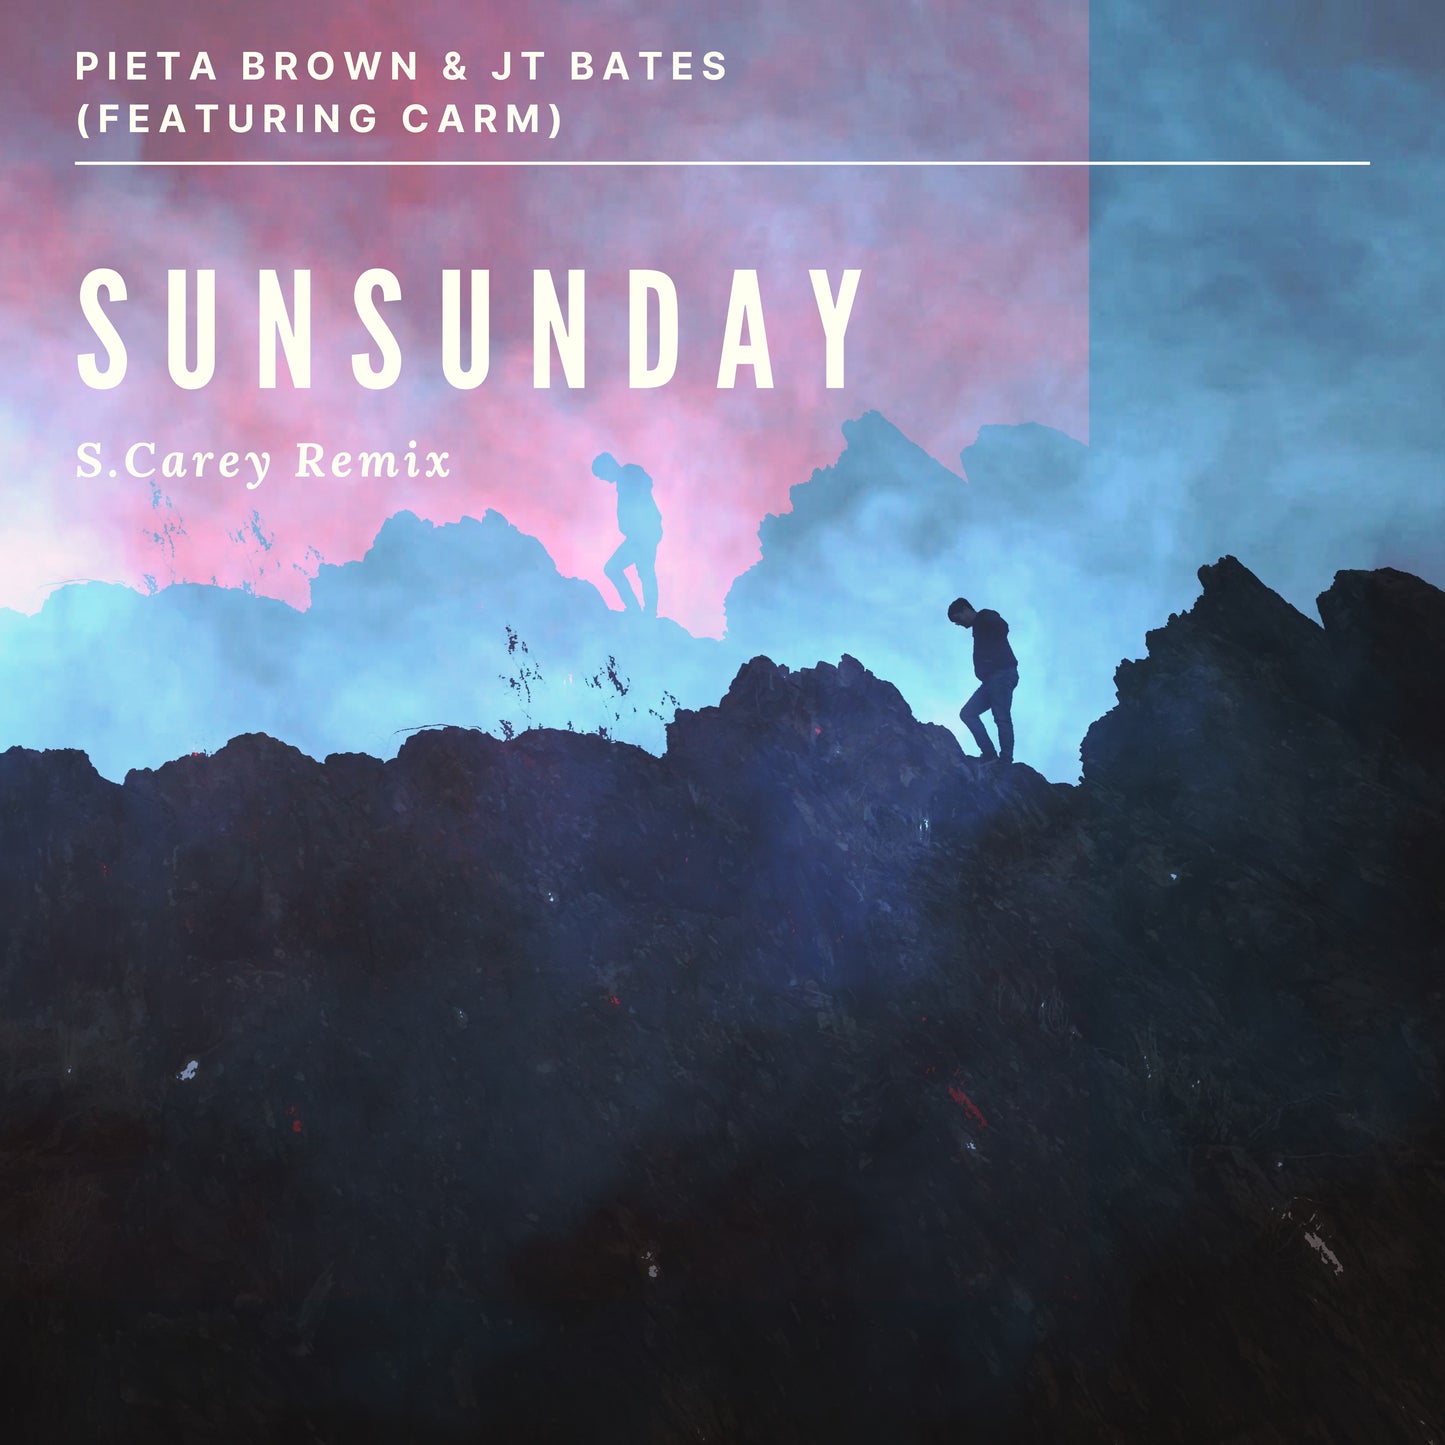 Pieta Brown & JT Bates (feat. CARM) - Sunsunday (S. Carey Remix) (Single)